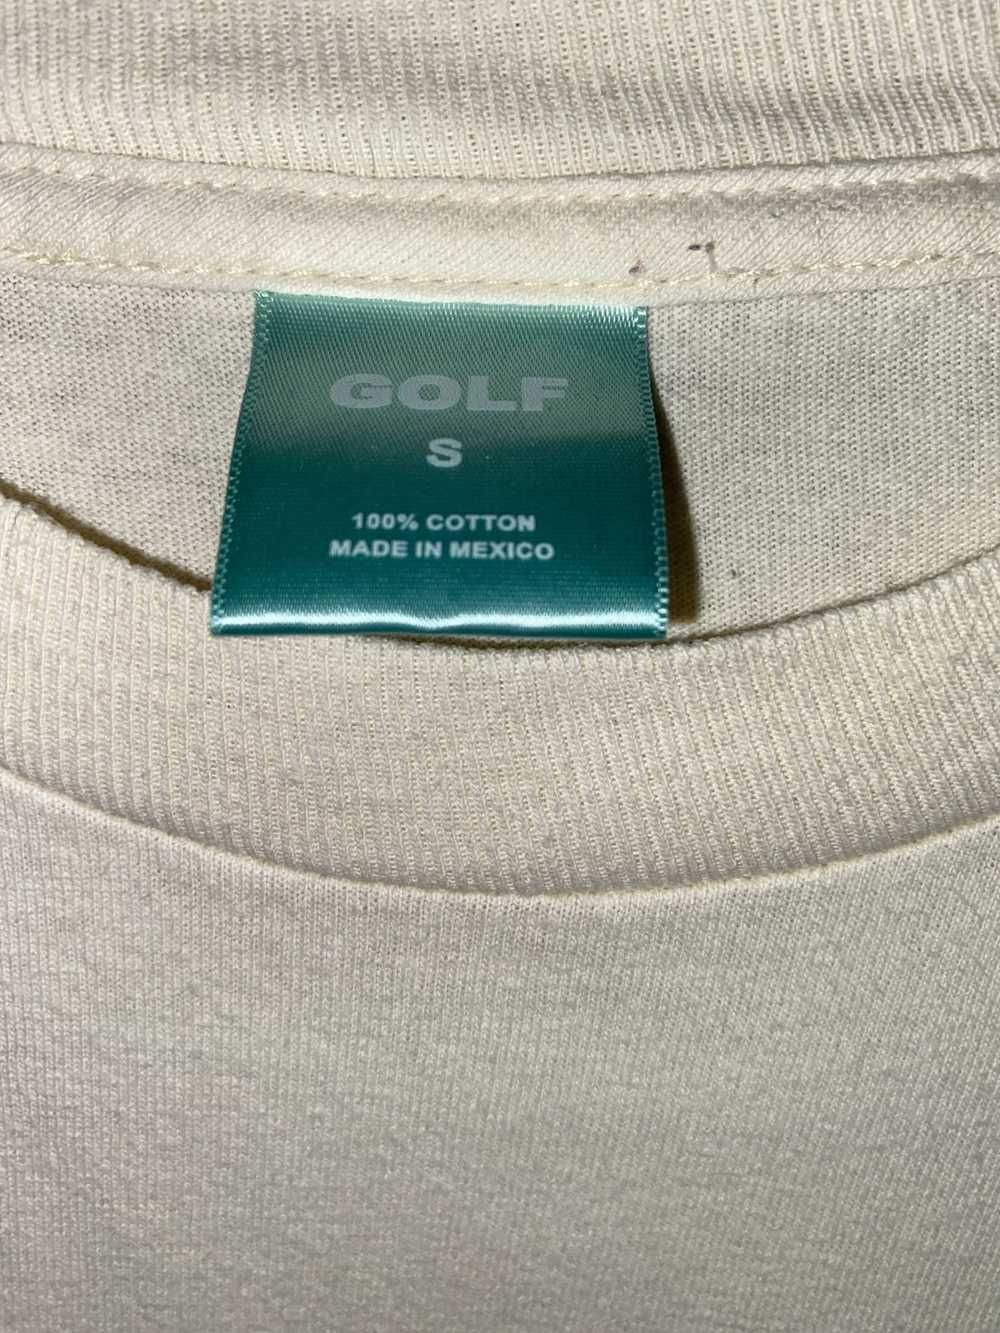 Golf Wang Golf Wang Logo Cream Tee (rare) - image 3